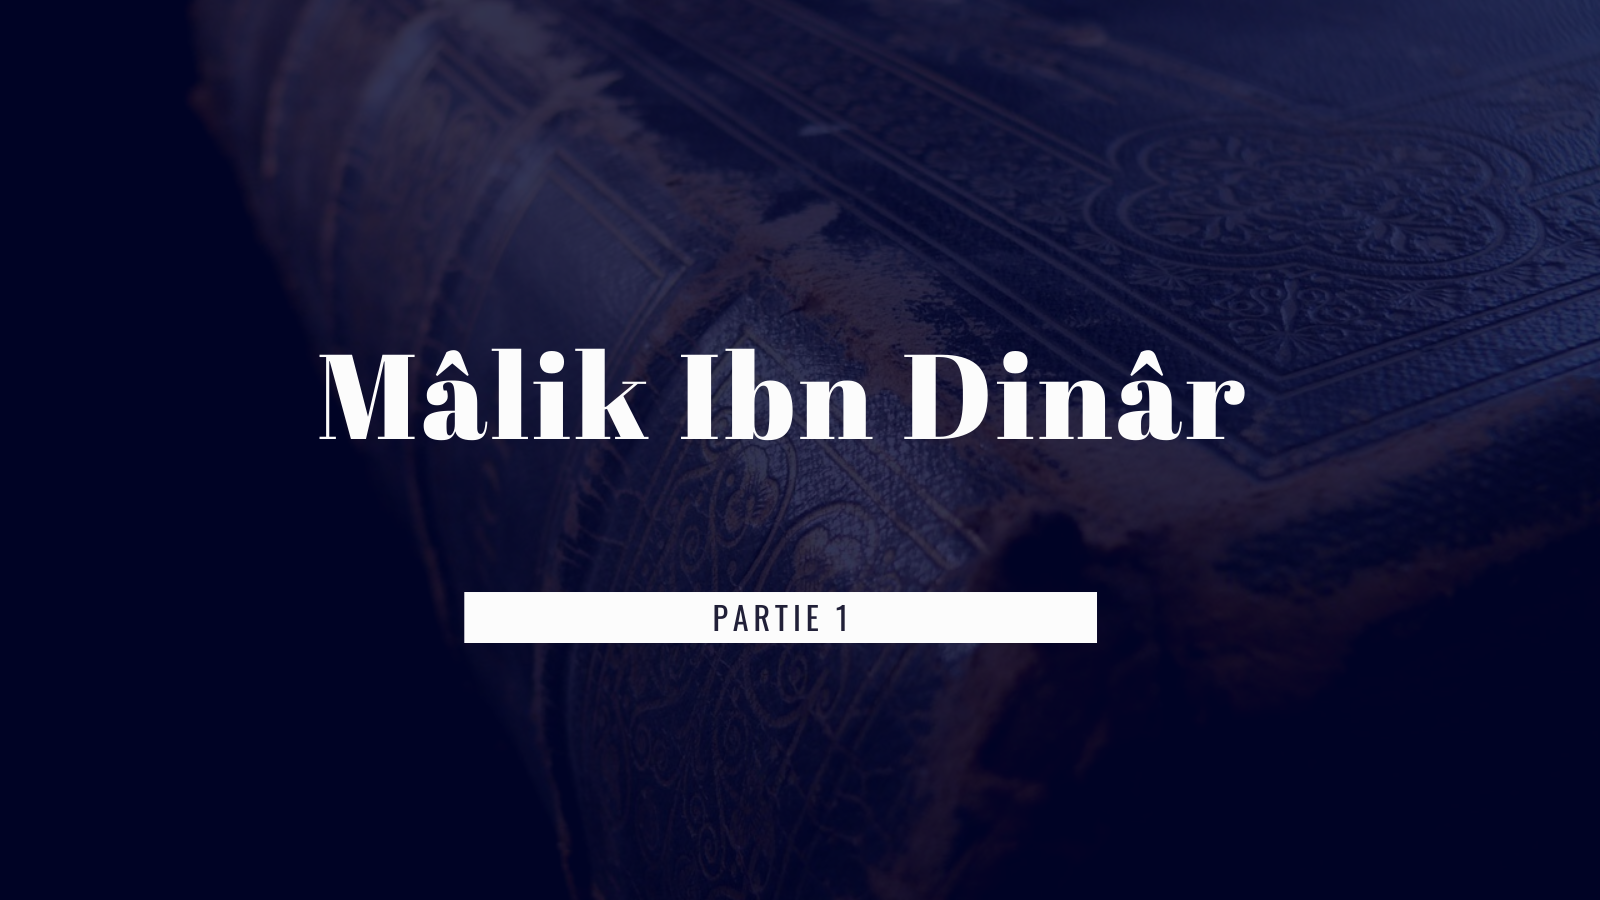 Histoire de Mâlik Ibn Dinâr – Partie 1